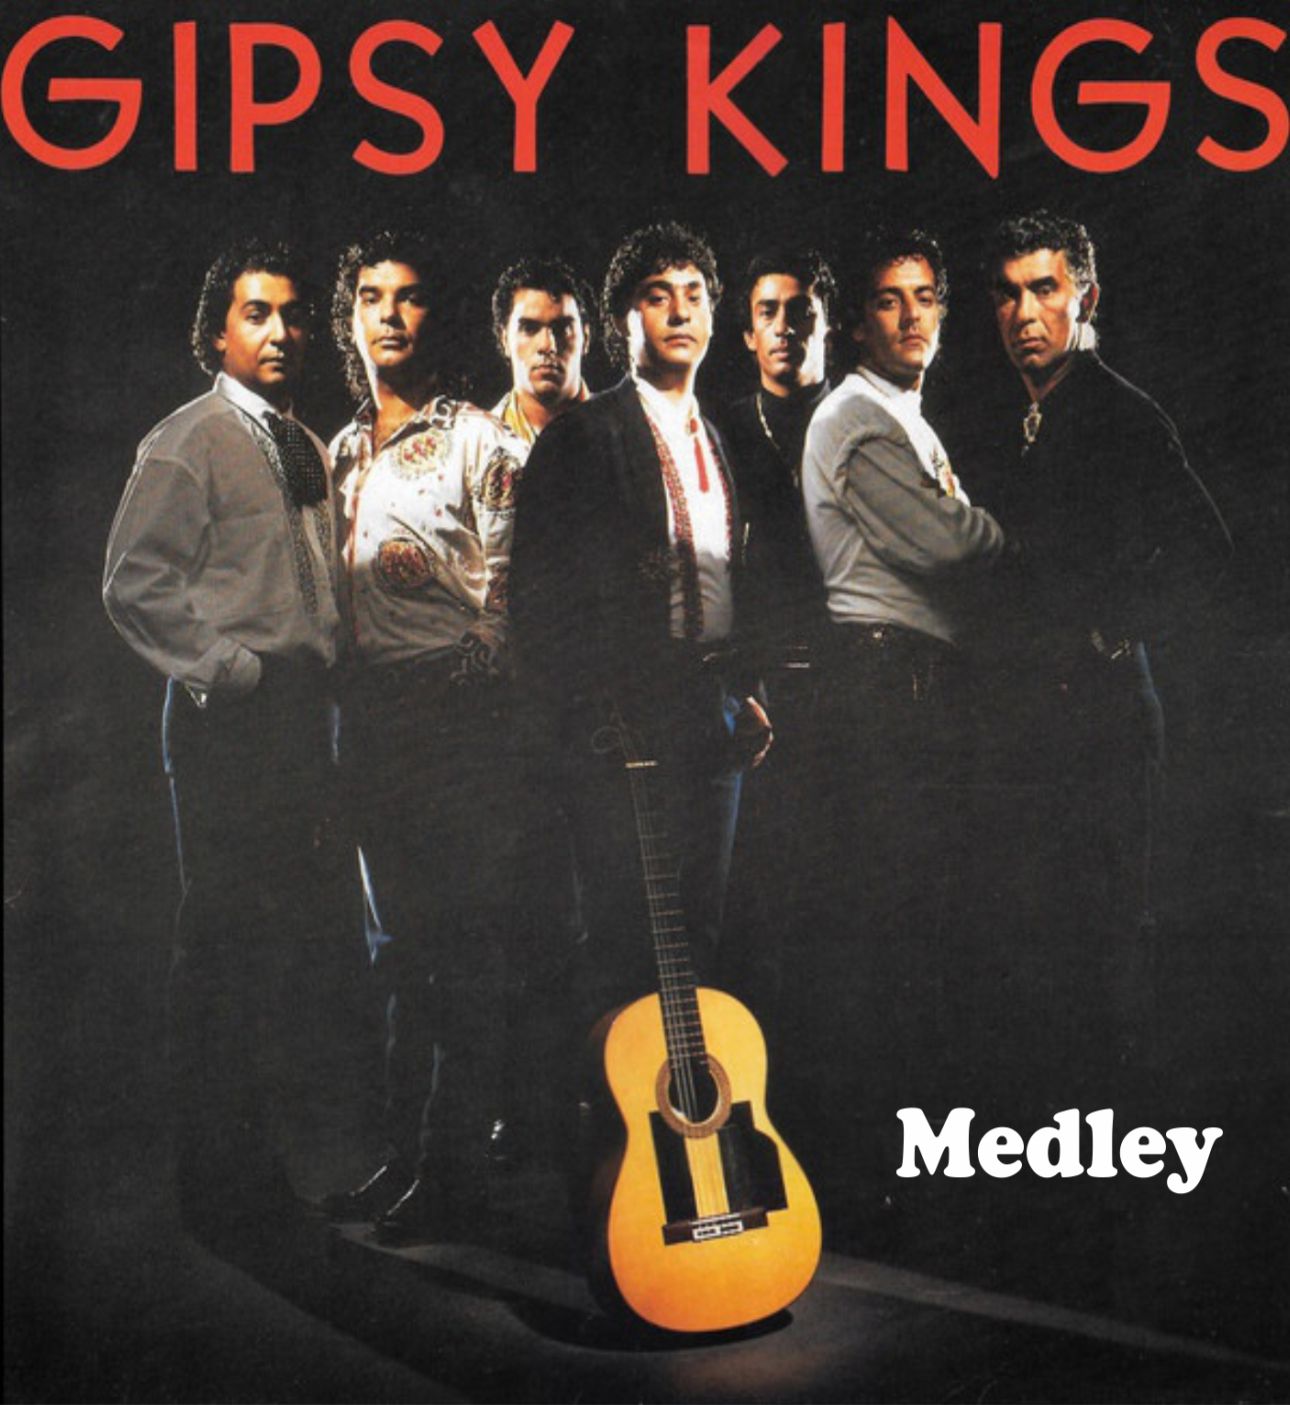 Gipsy kings песни. Группа Gipsy Kings. Gipsy Kings фото. Gipsy Kings-Medley- фото. Джипси Кингс концерт в Москве 2024 году.